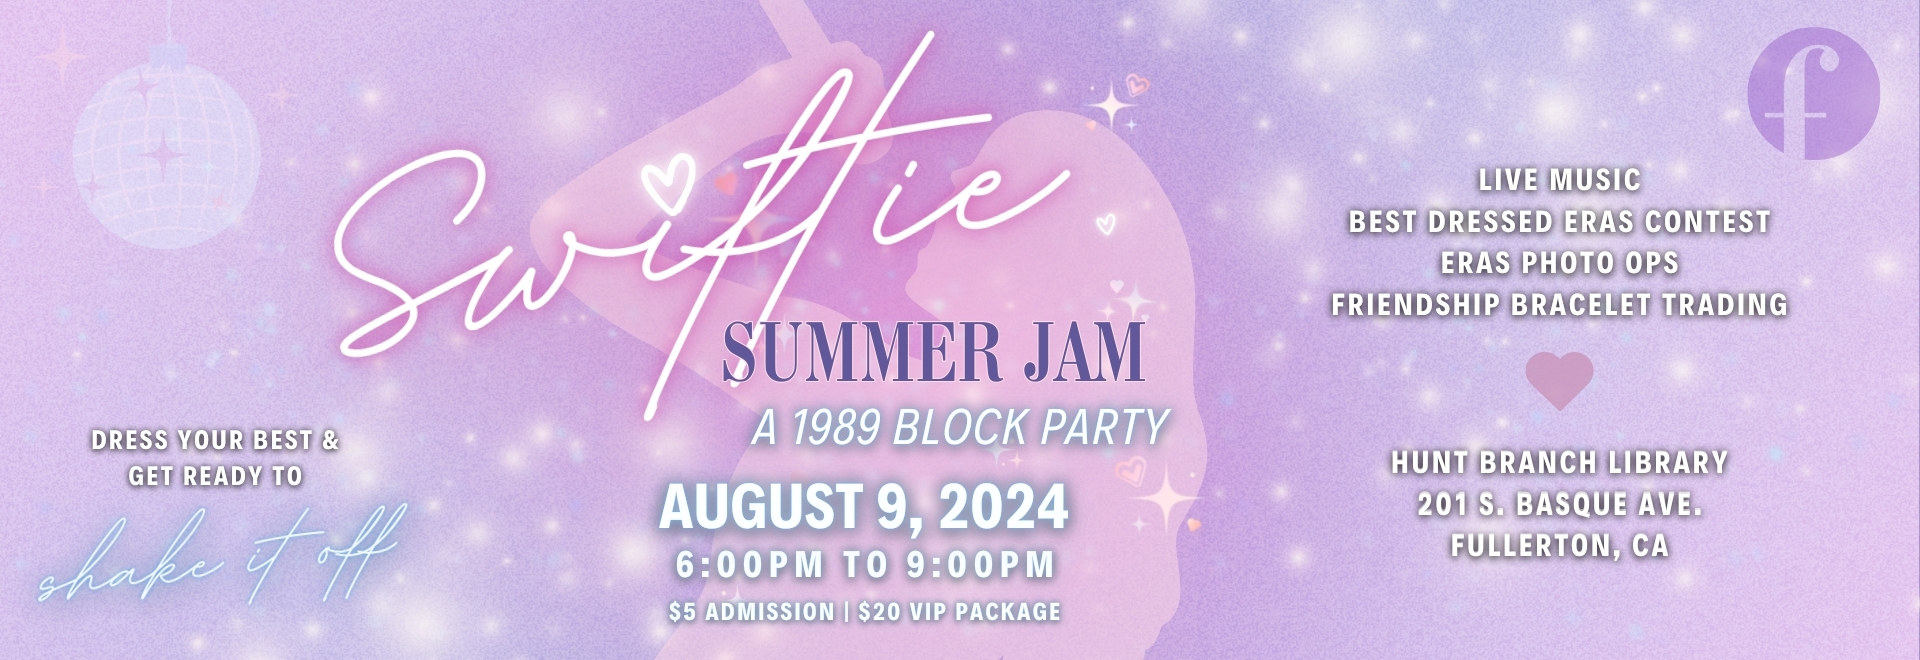 Swiftie Summer Jam 2